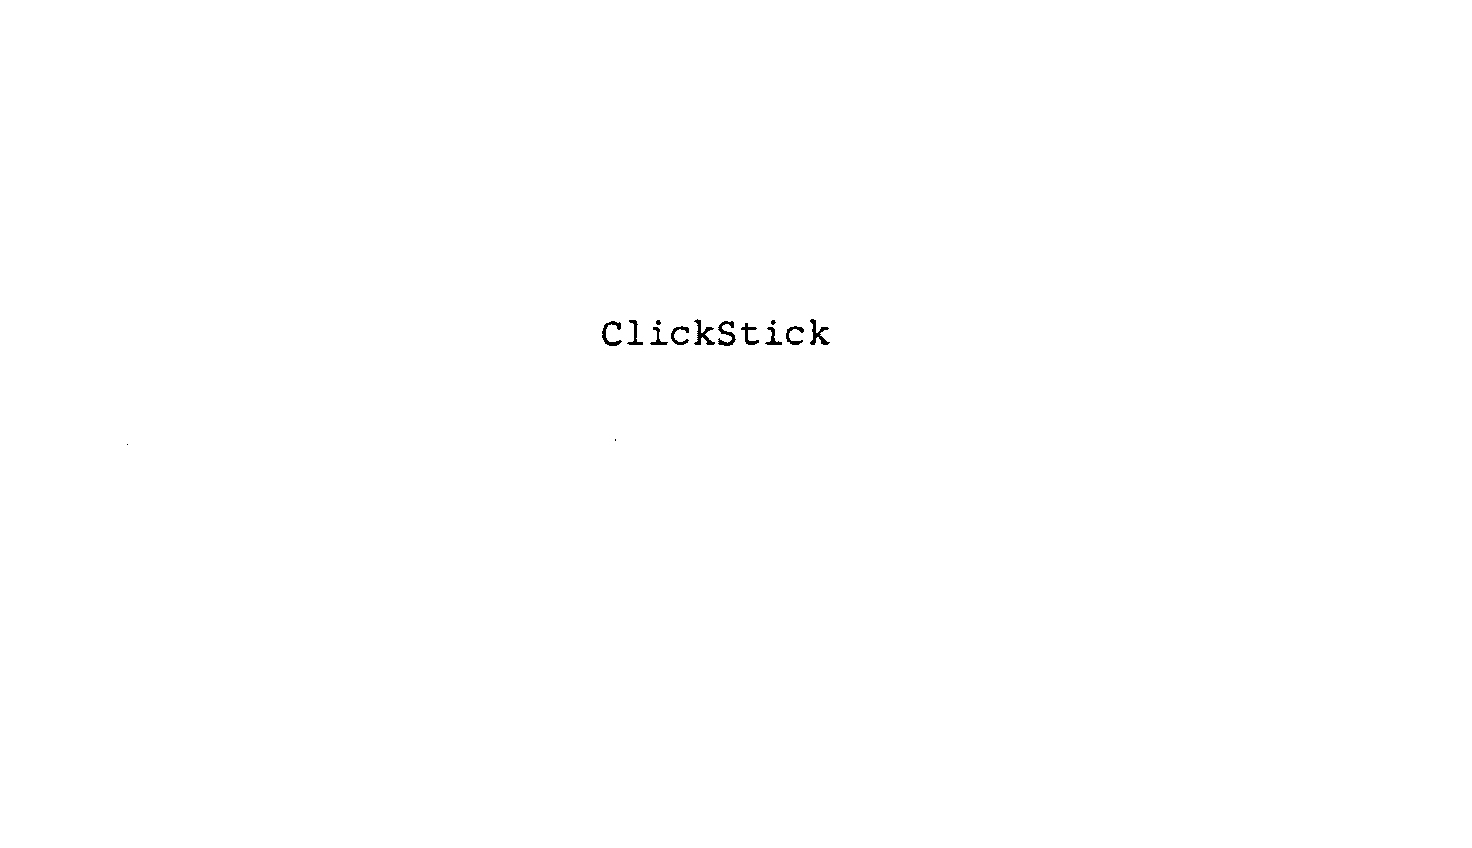  CLICKSTICK